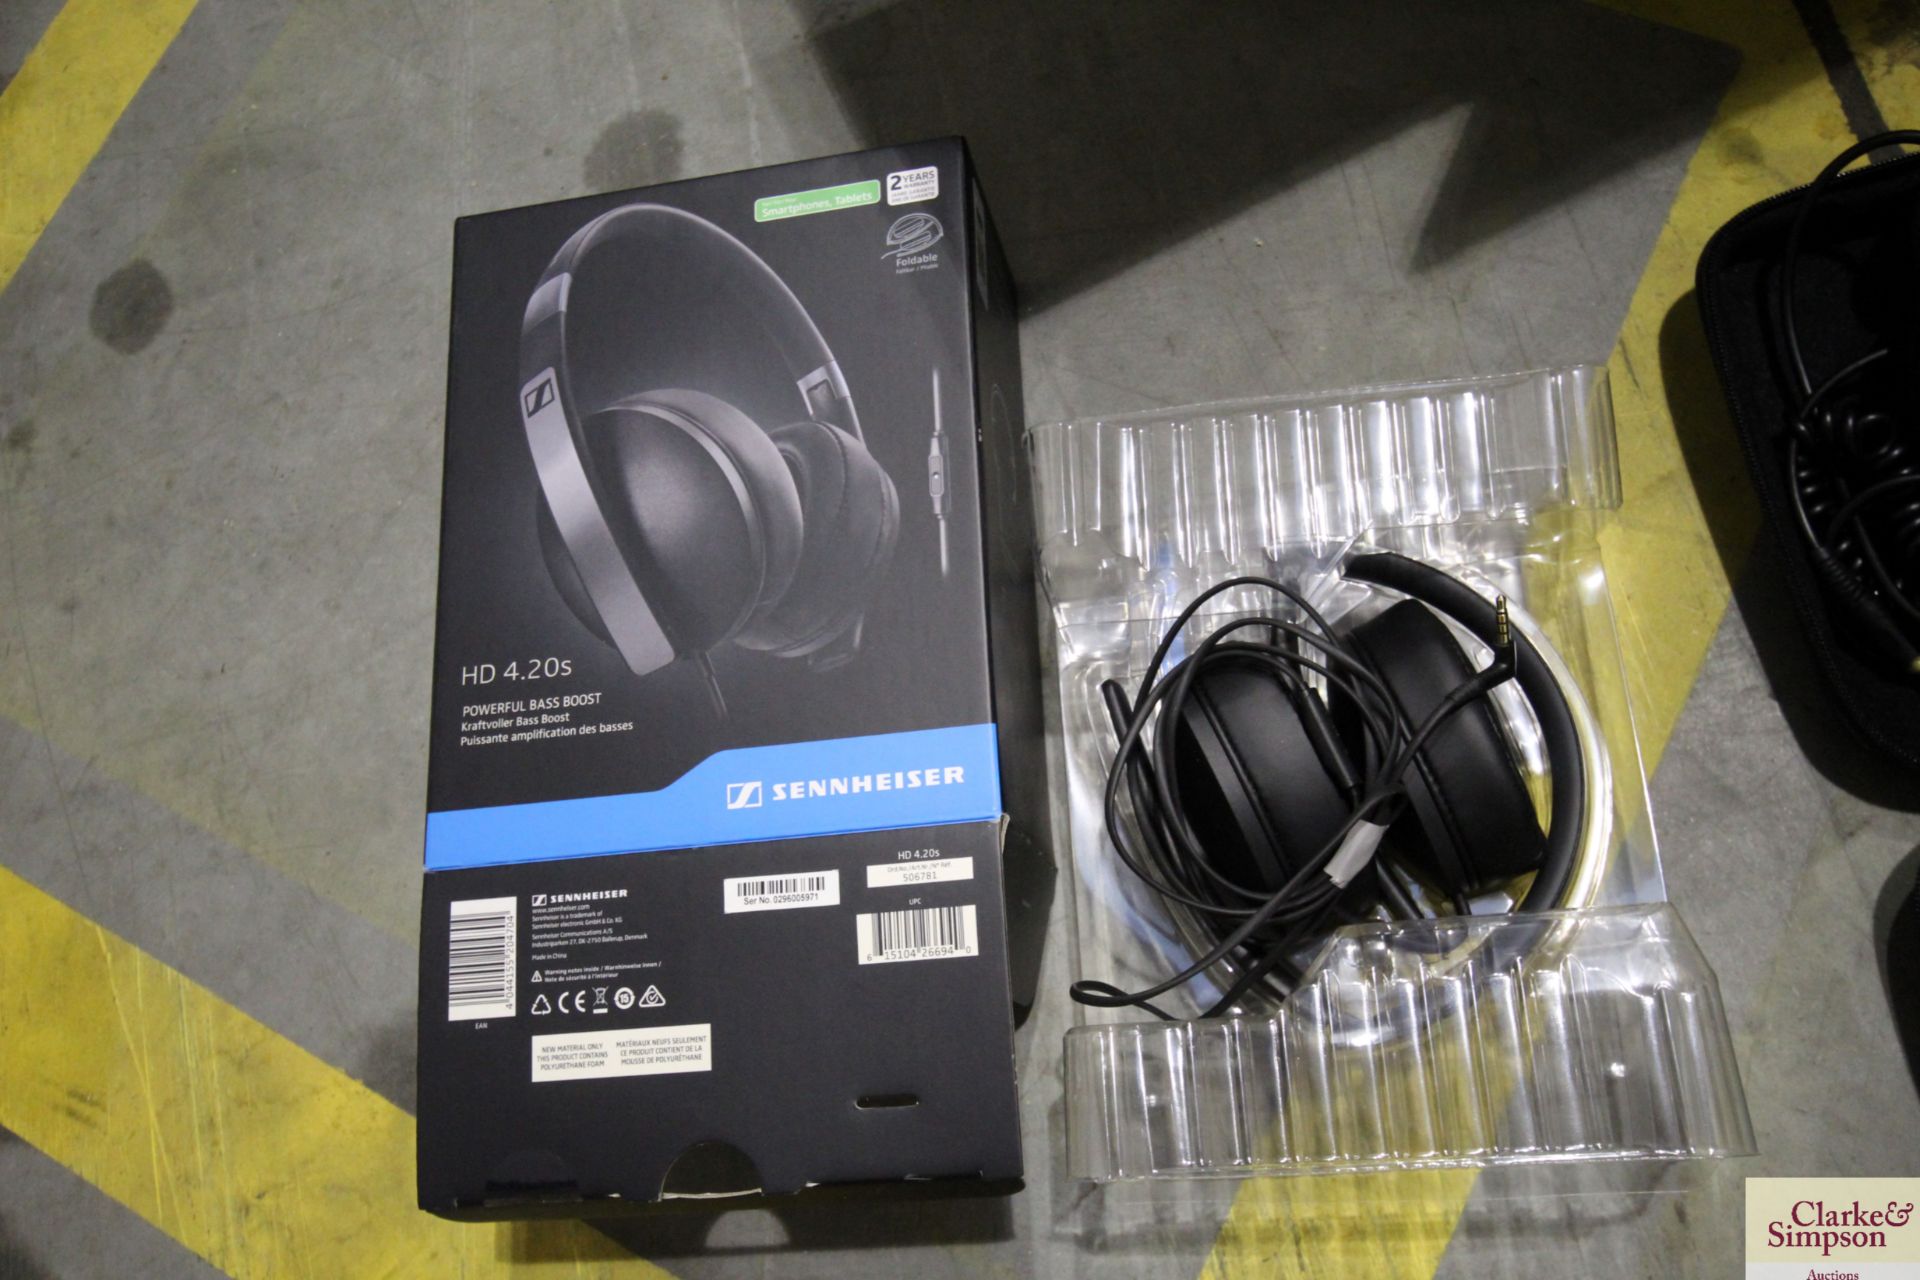 6x Sennheiser HD380 Pro headphones in cases, and 3x Sennheiser HD4.20S headphones in boxes. V - Image 3 of 4